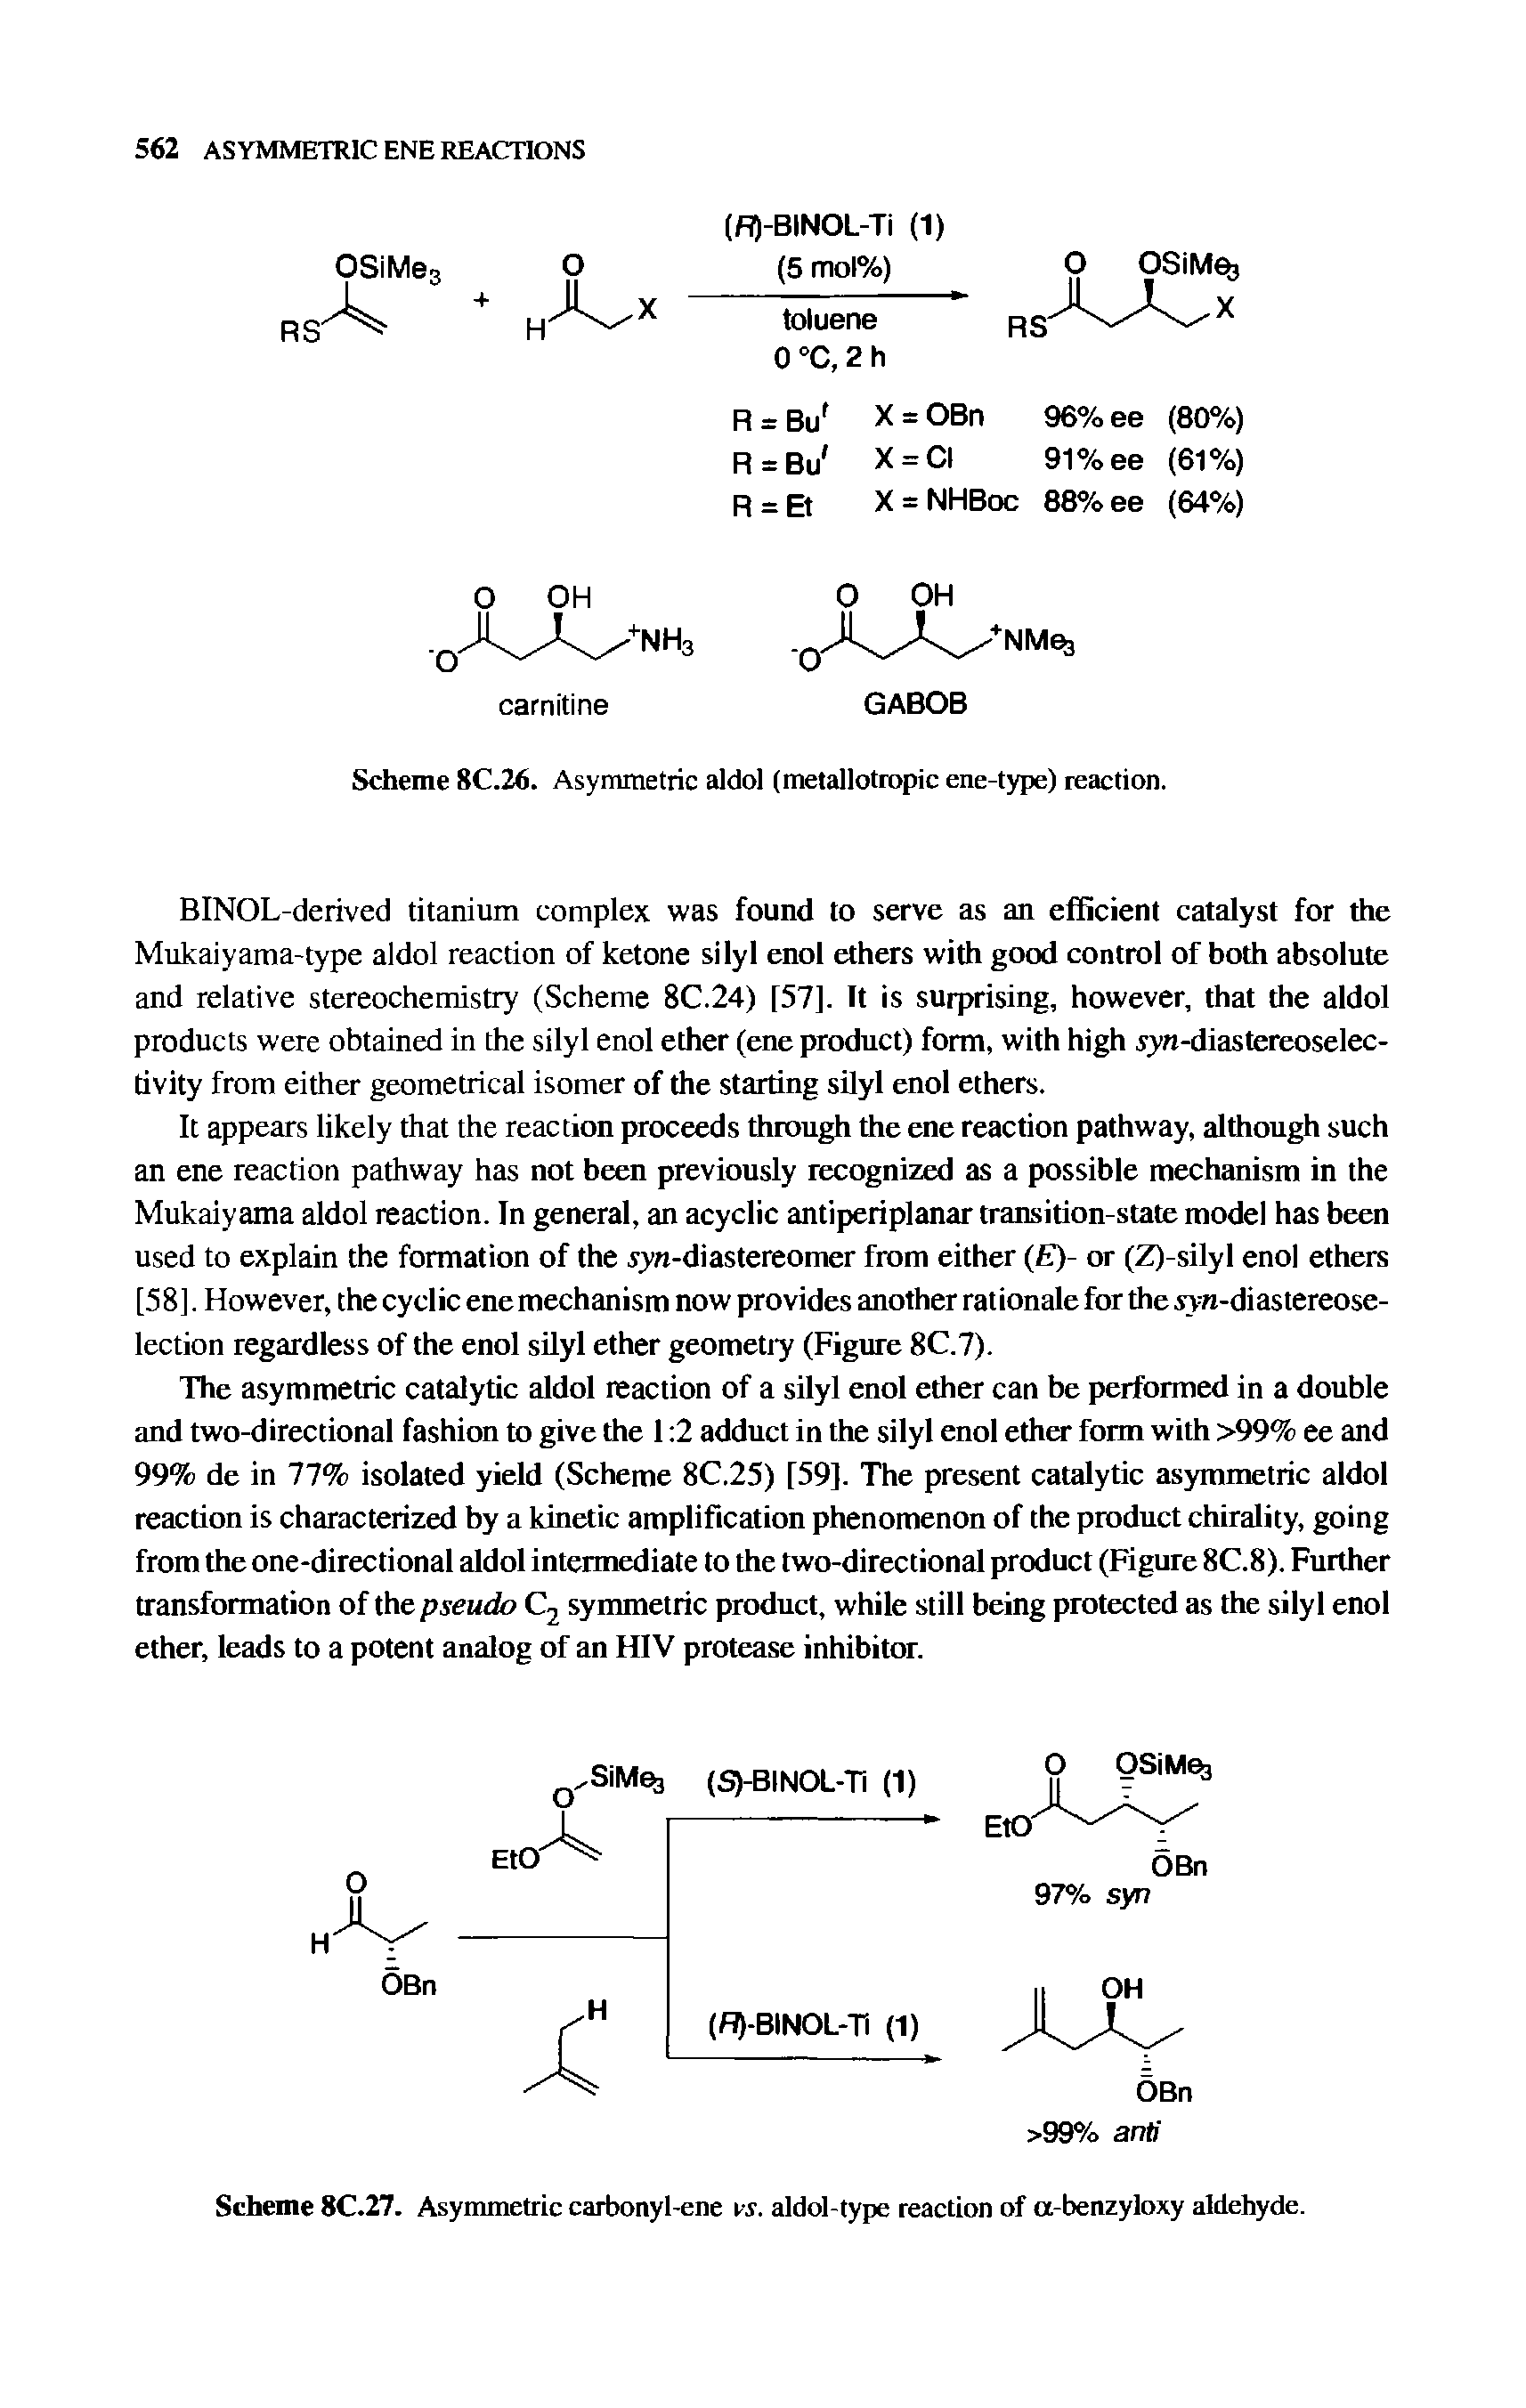 Scheme 8C.27. Asymmetric carbonyl-ene rr. aldol-type reaction of a-benzyloxy aldehyde.